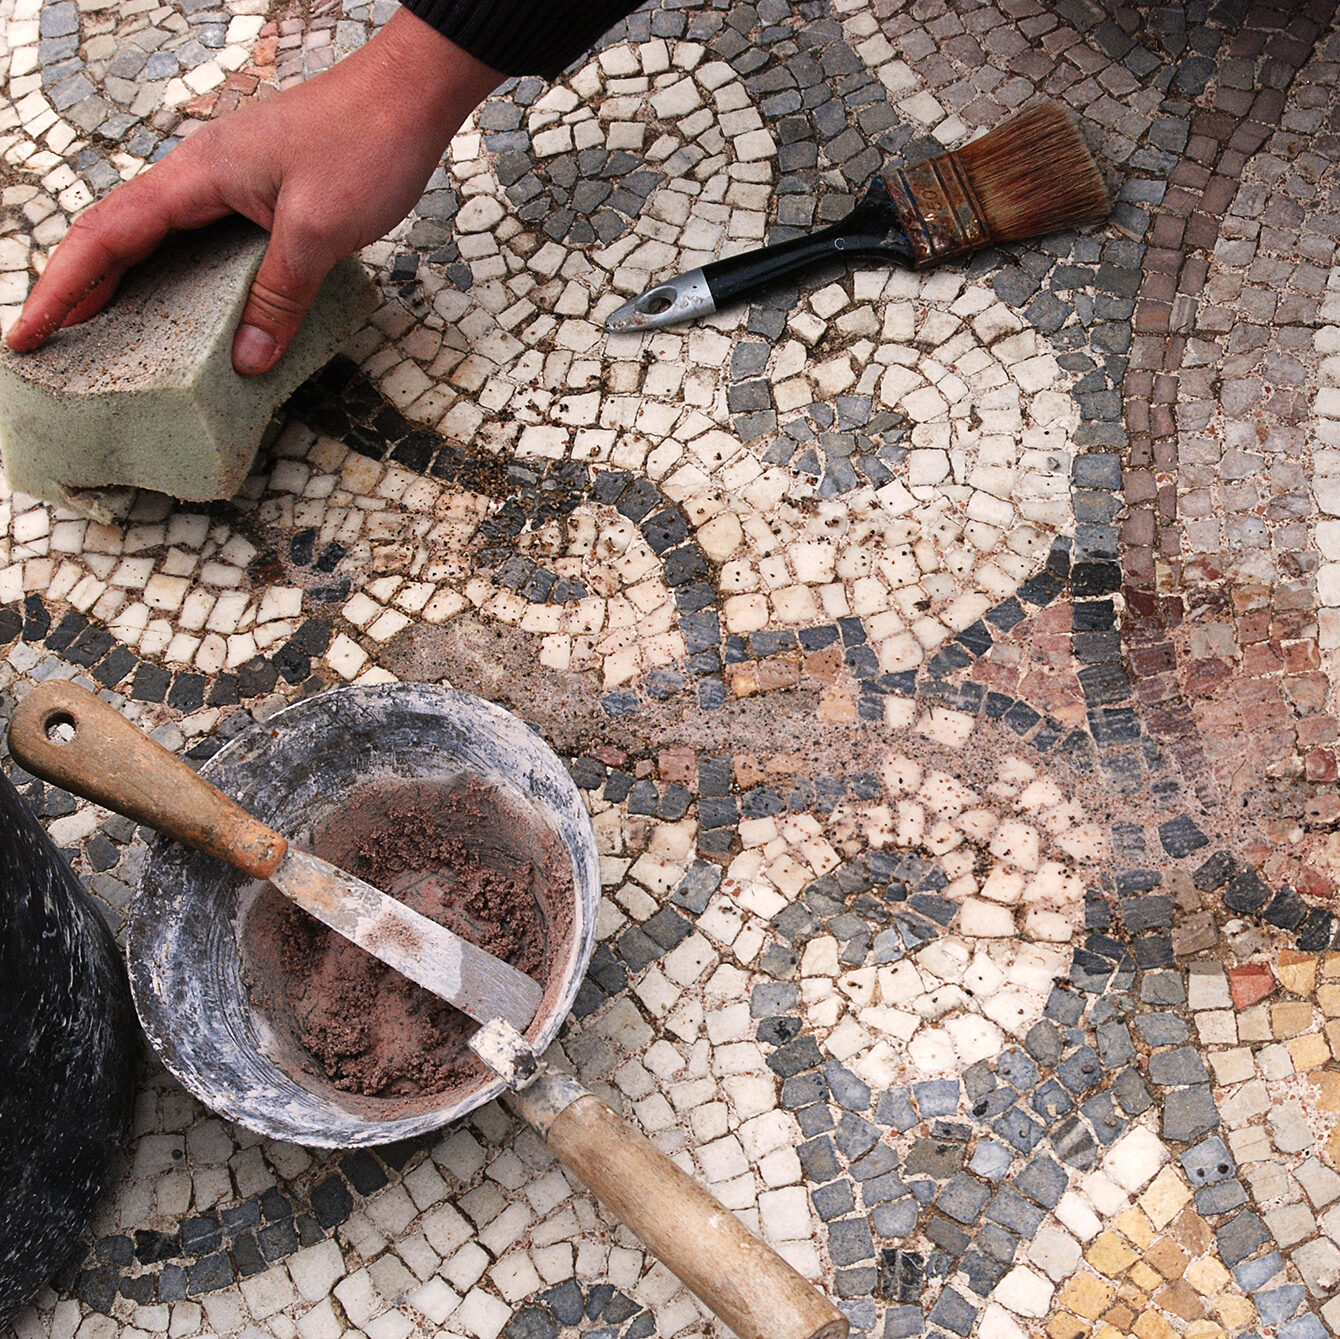 EZBld construction worker restoring flooring mosaics in a restoration project.